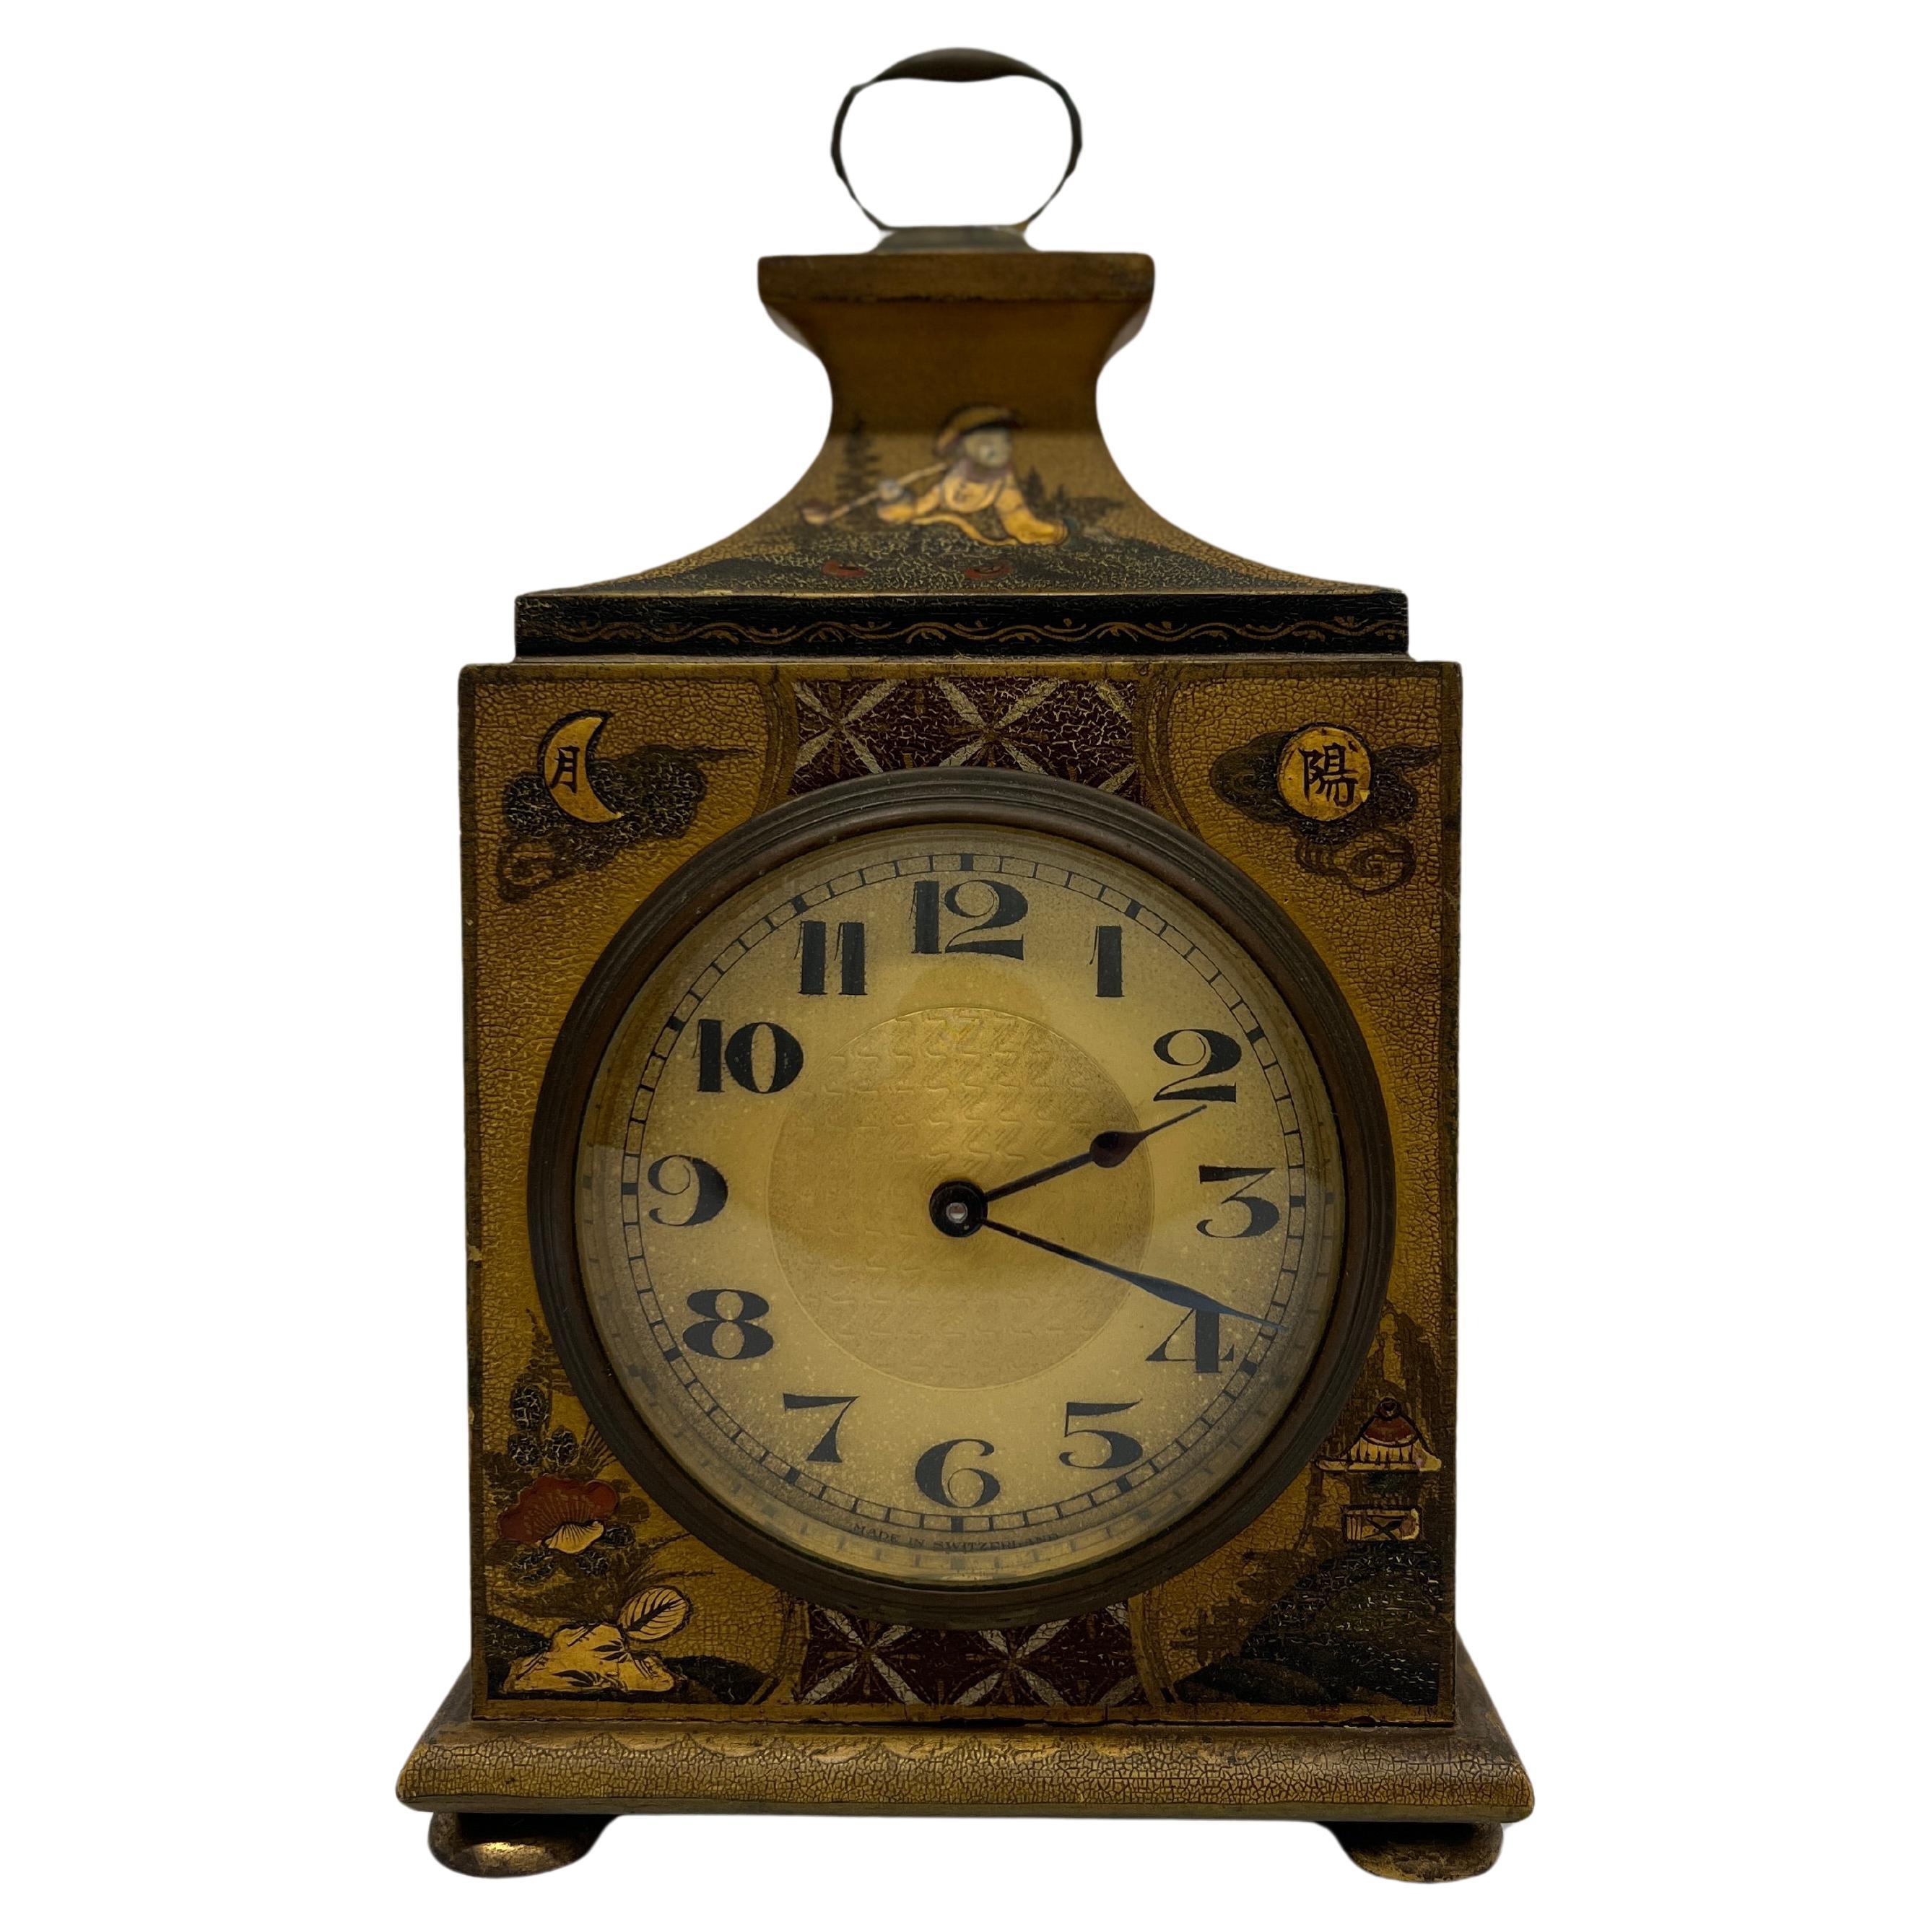 Shreve Crump & Low Boston Chinoiserie Decorated Tole Mantel Clock - Swiss Mov't